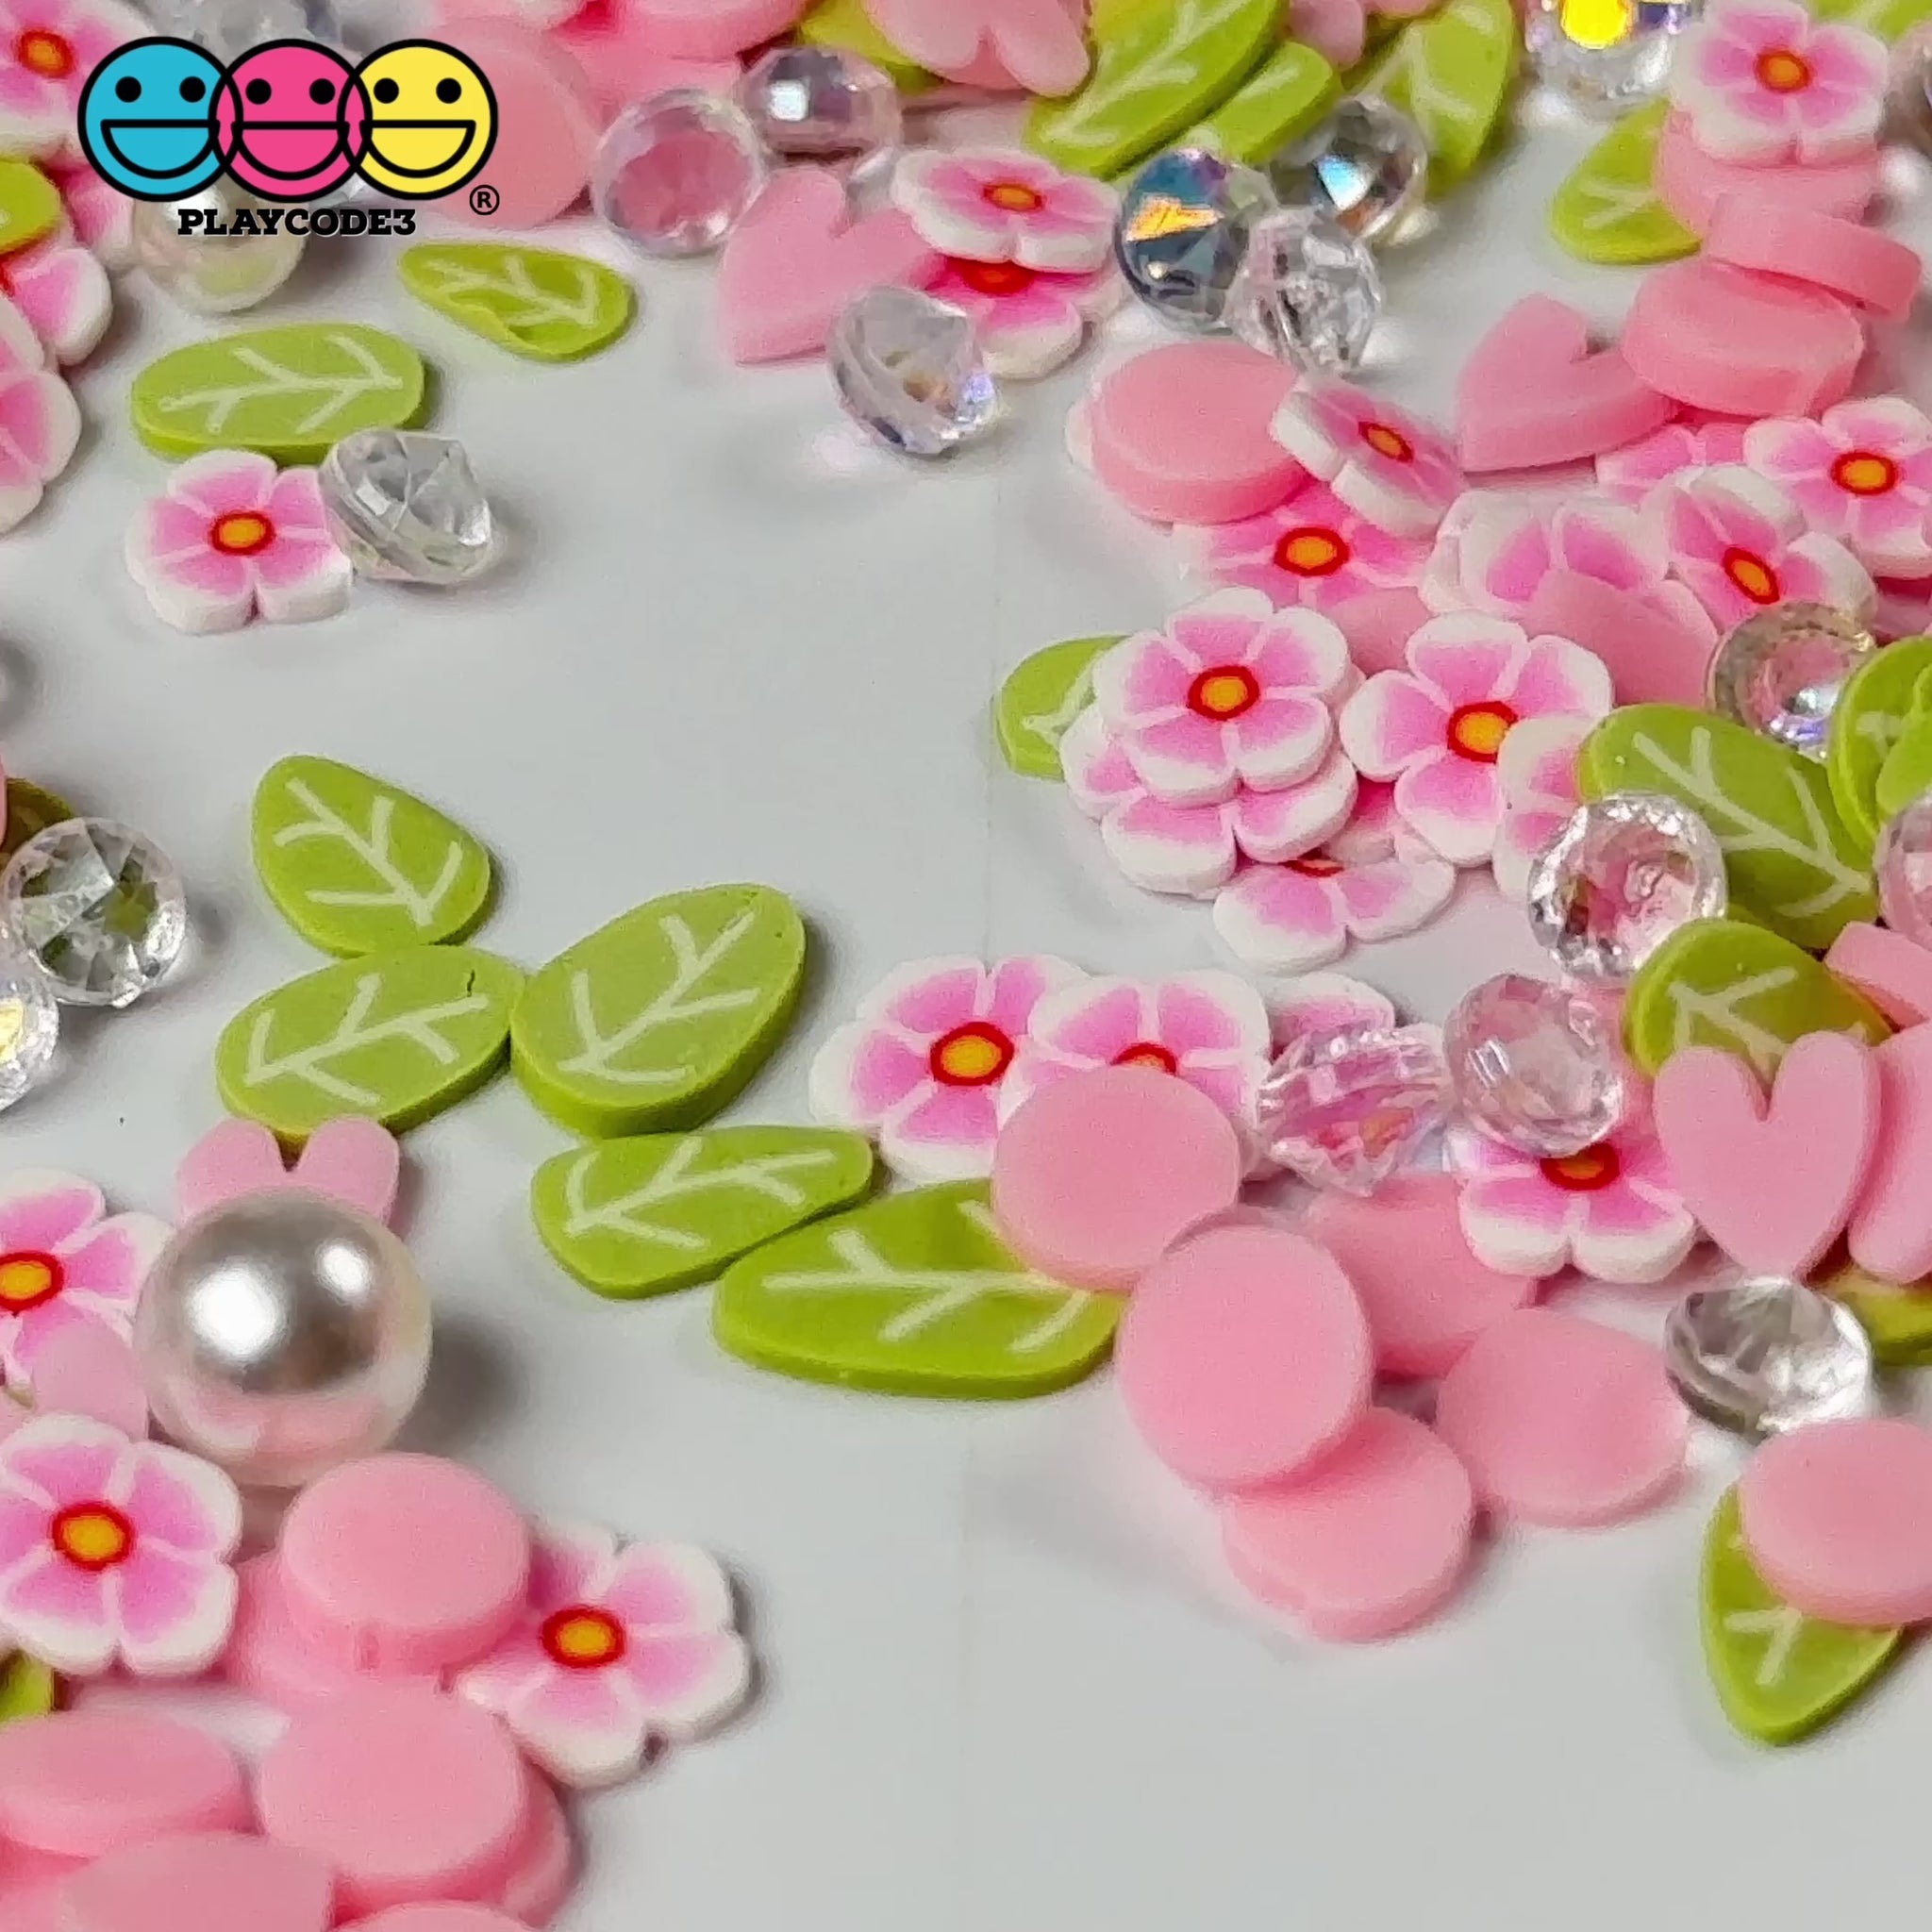 Dandy Daisy - Clay Flower Sprinkles Embellishment Mix– Trinity Stamps